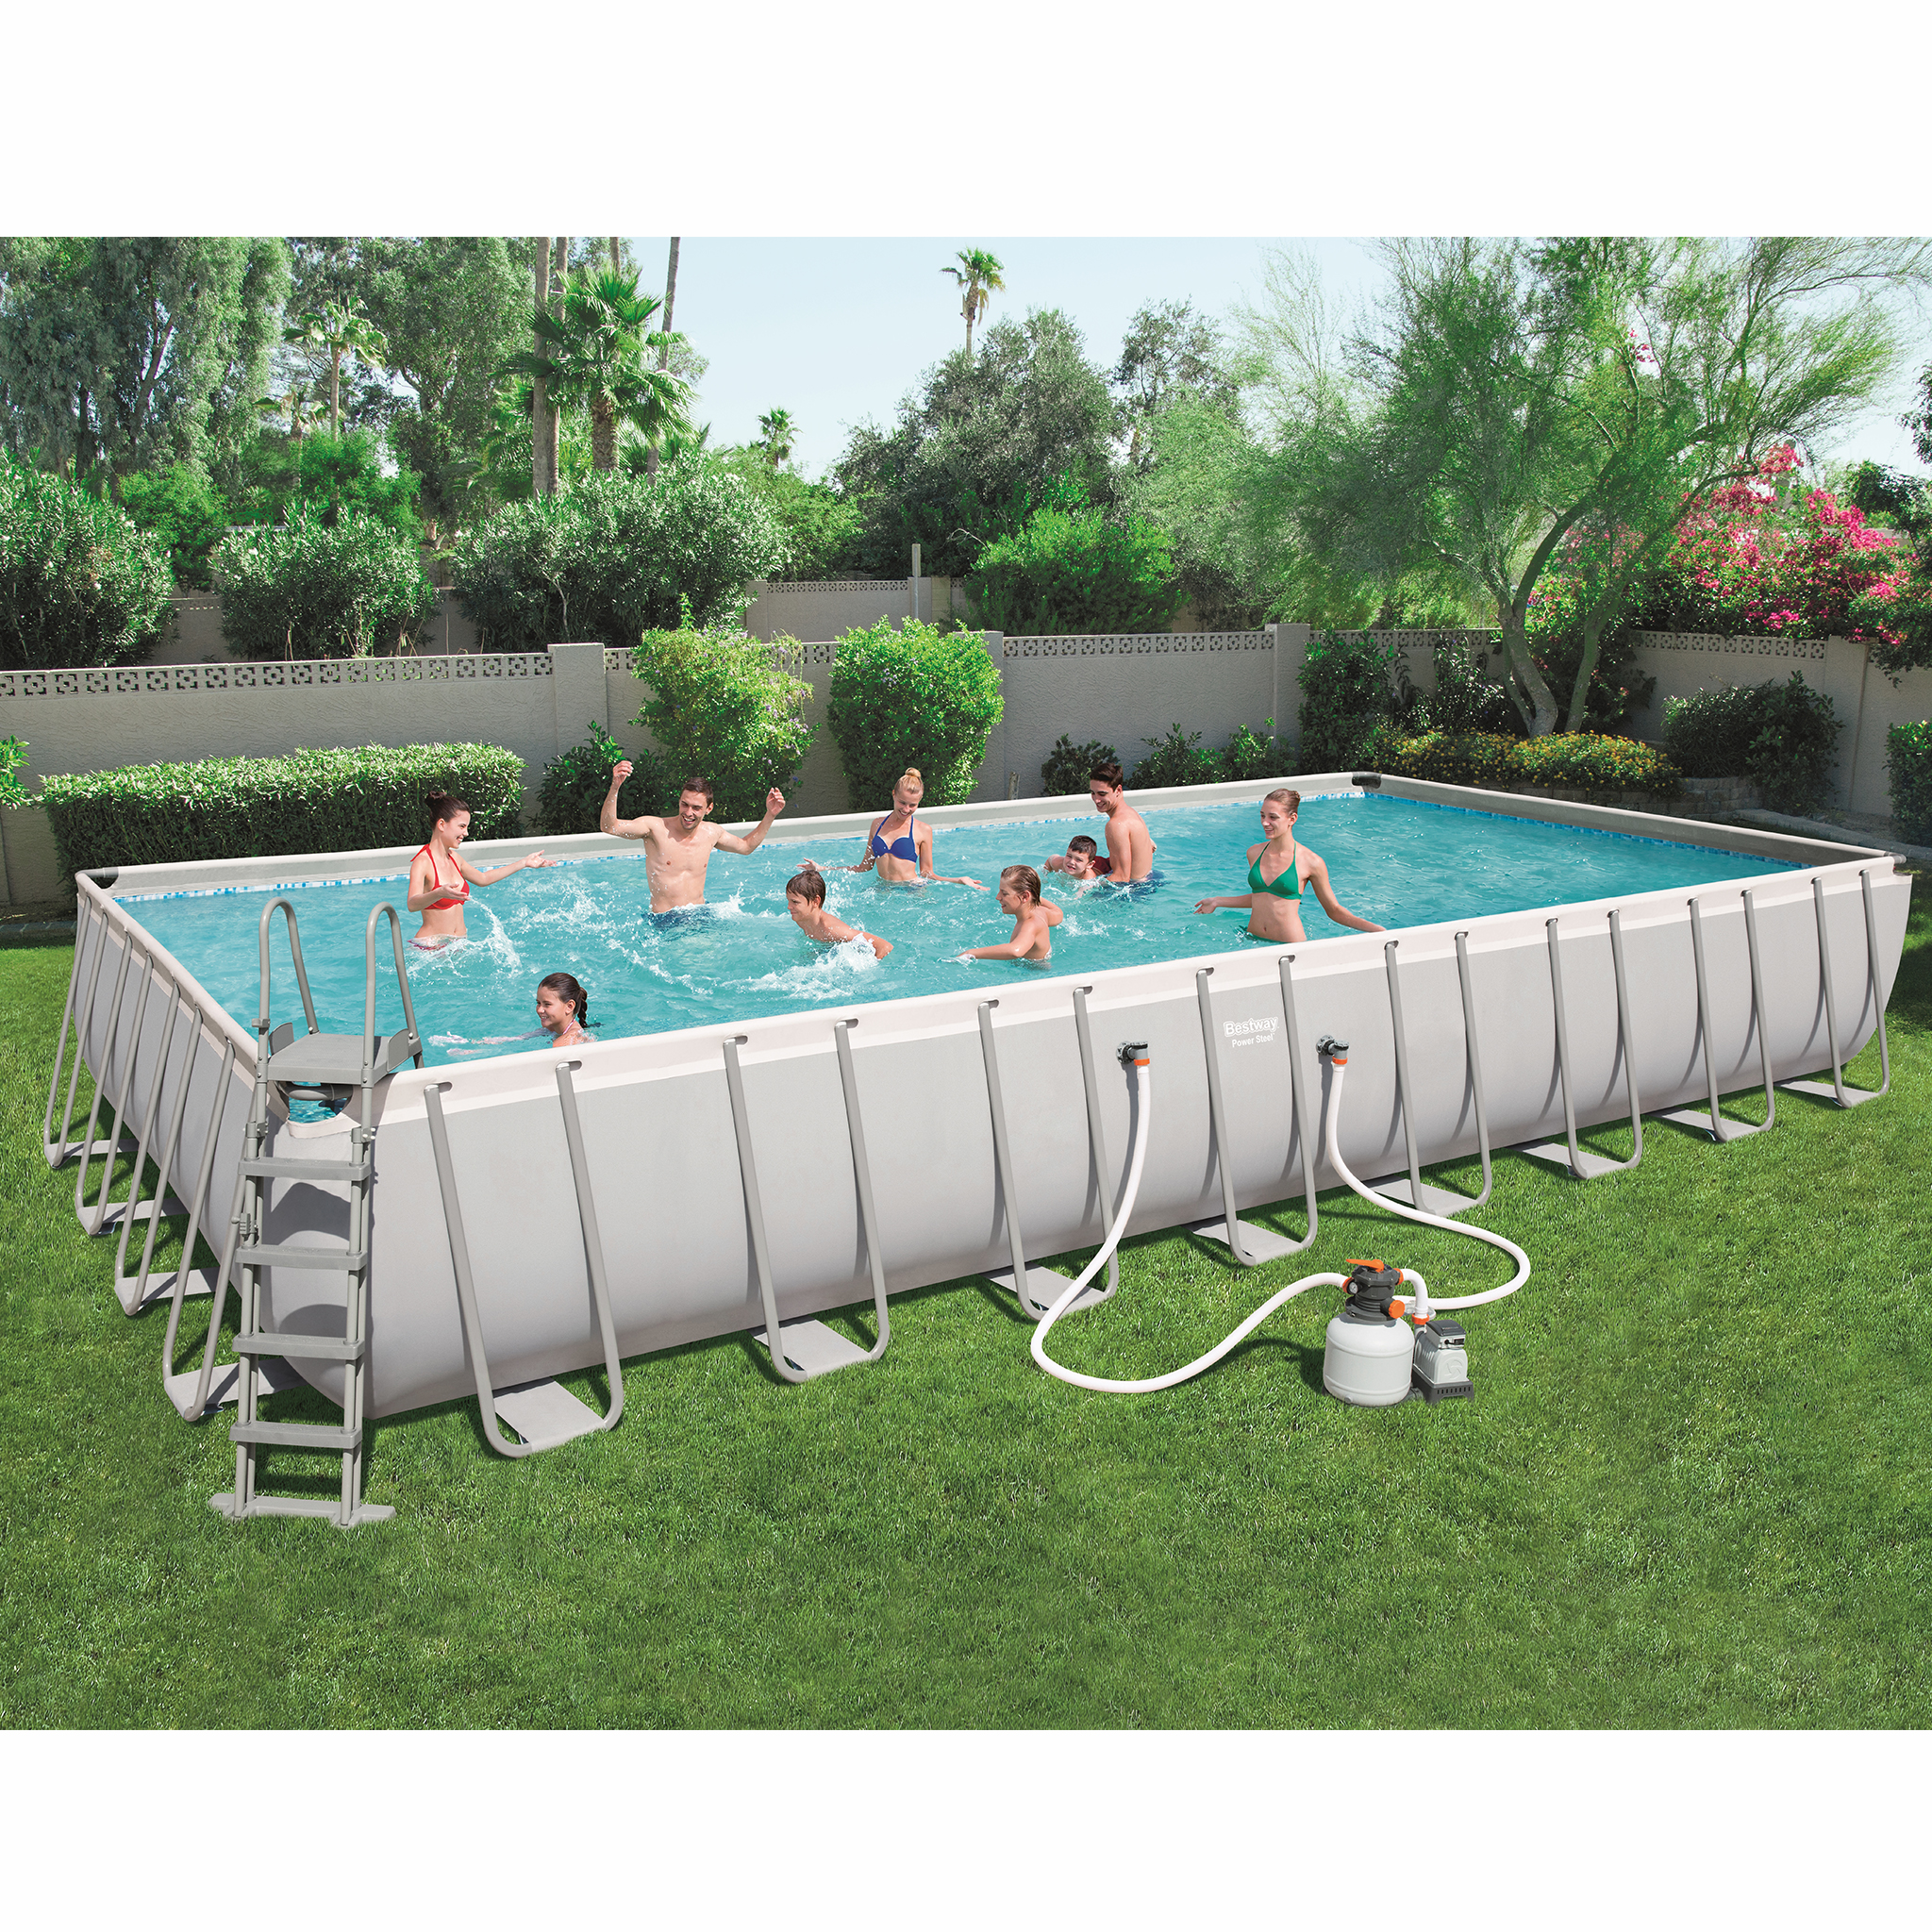 Produktfoto för Bestway pool ovan mark 9,6x4,9m - 132cm djup | Power Steel (56623)